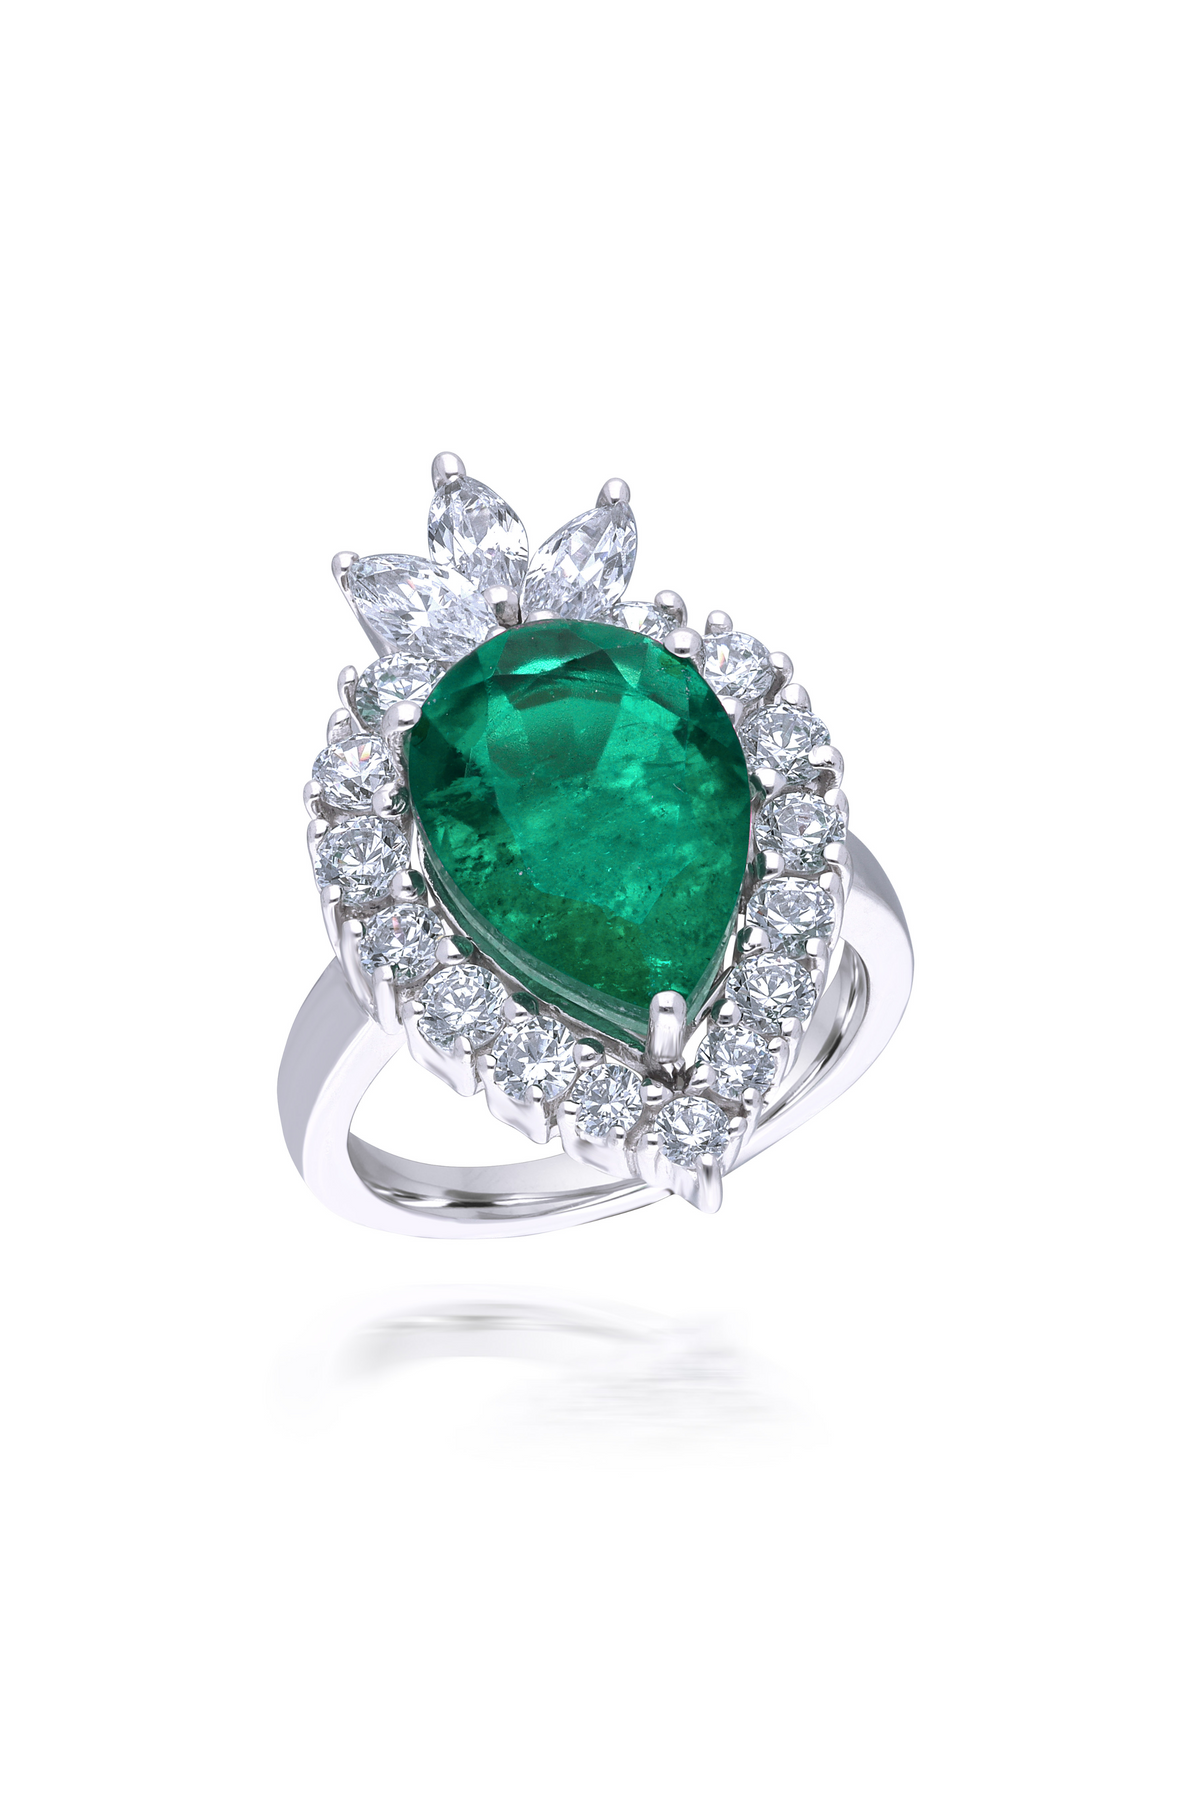 Swarovski Zirconia Cocktail White Pear Shaped Emerald Ring